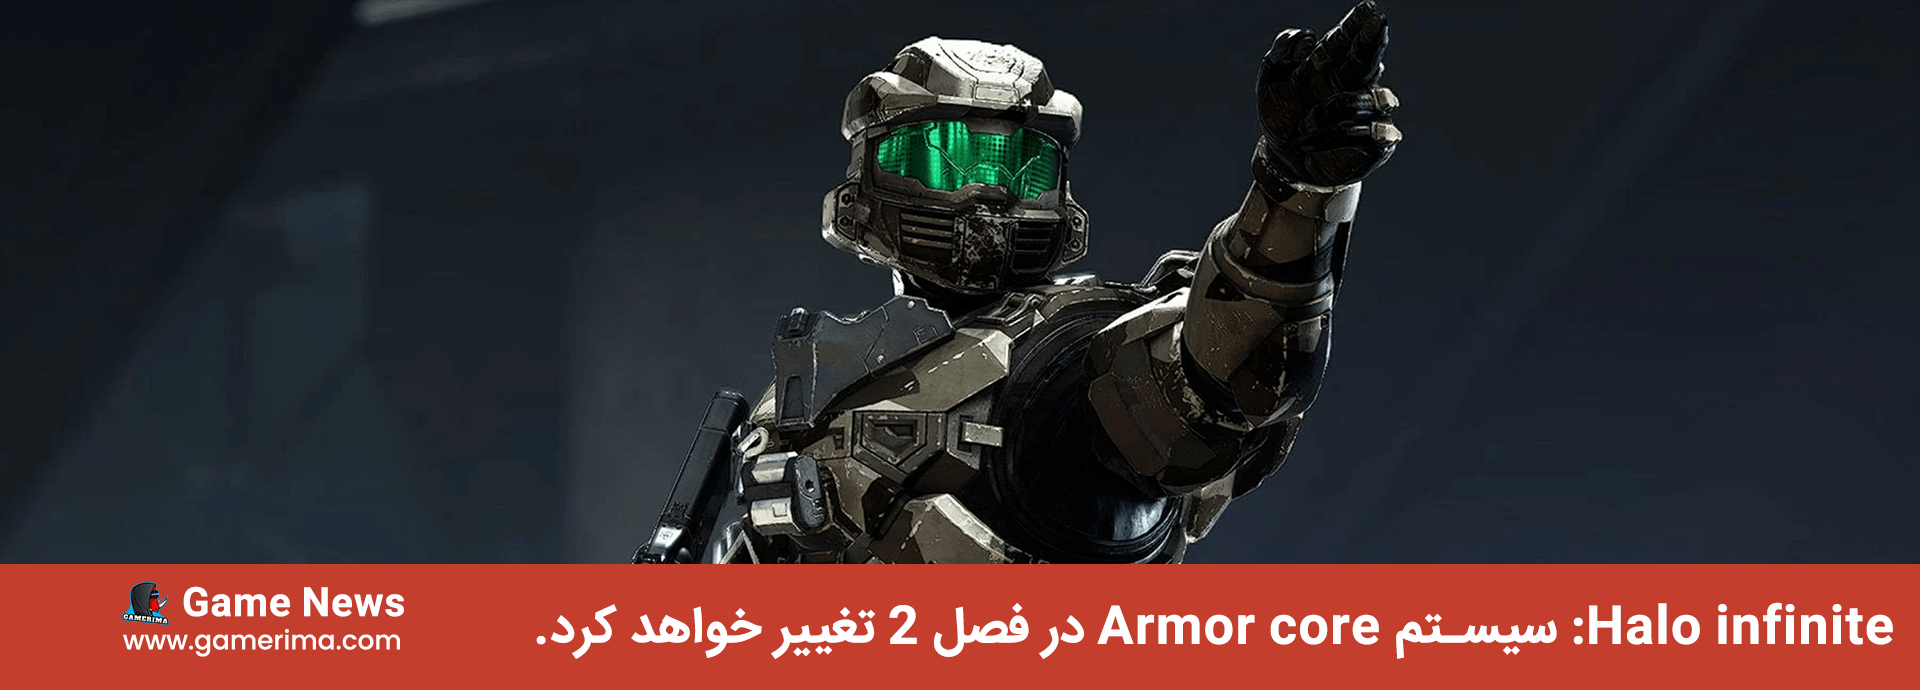 Halo infinite: سیستم Armor core در فصل ۲ تغییر خواهد کرد.